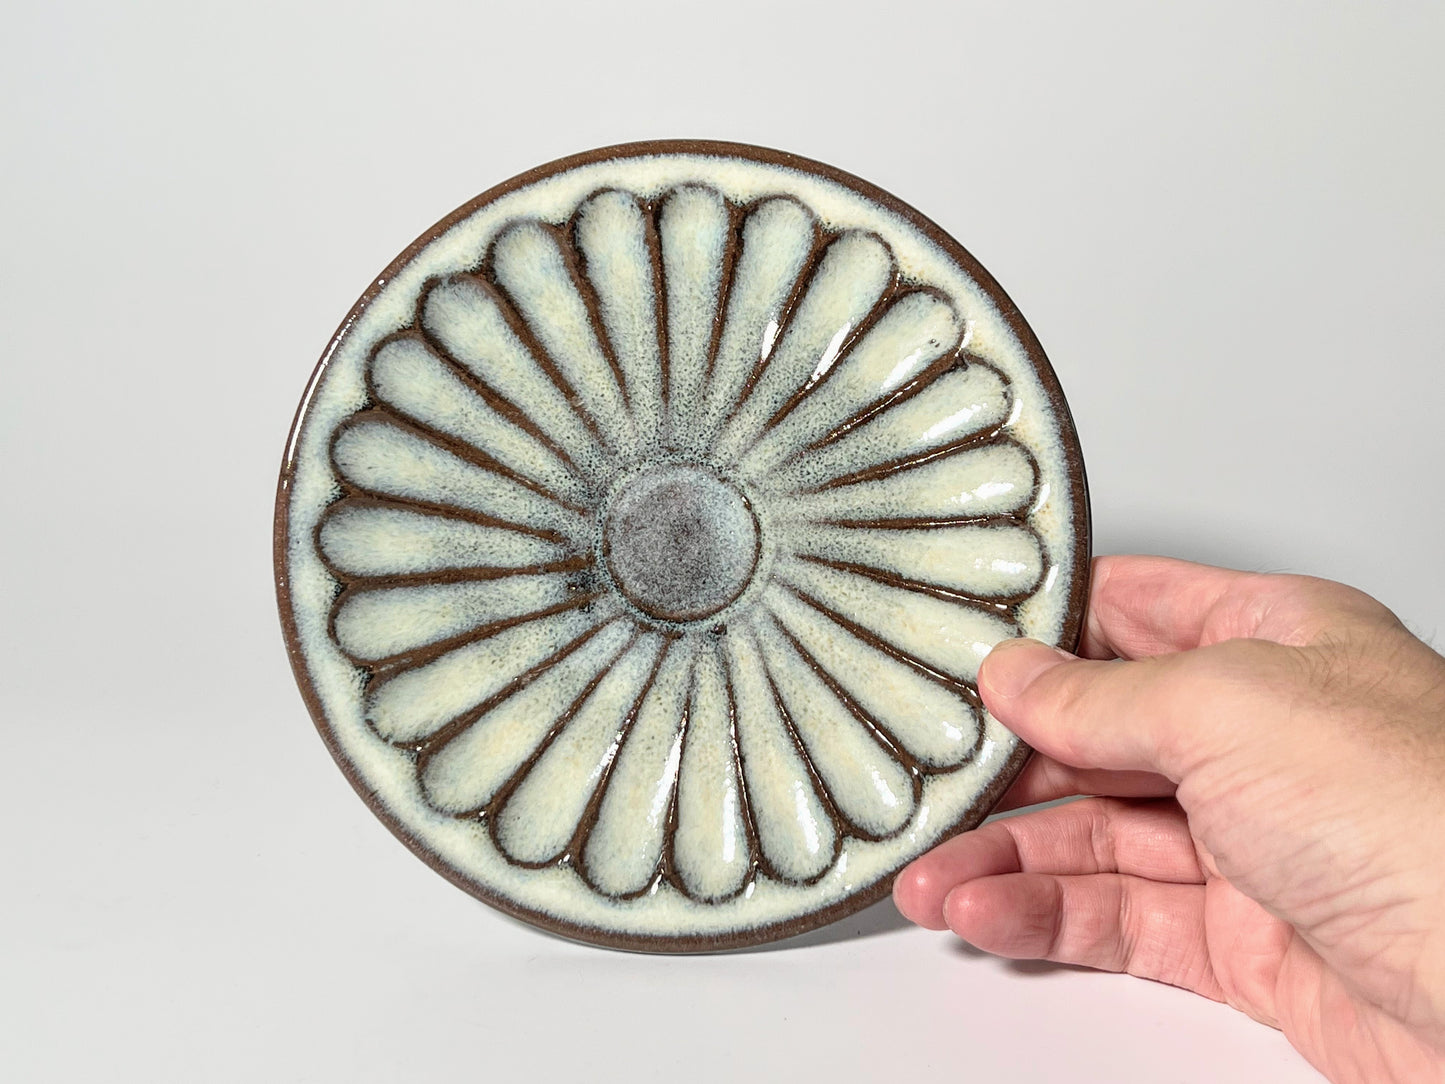 Yasutoshi Sakanishi (Yasutoshi Kiln) - 5 cm plate - Shinogi, chrysanthemum pattern - sugar white